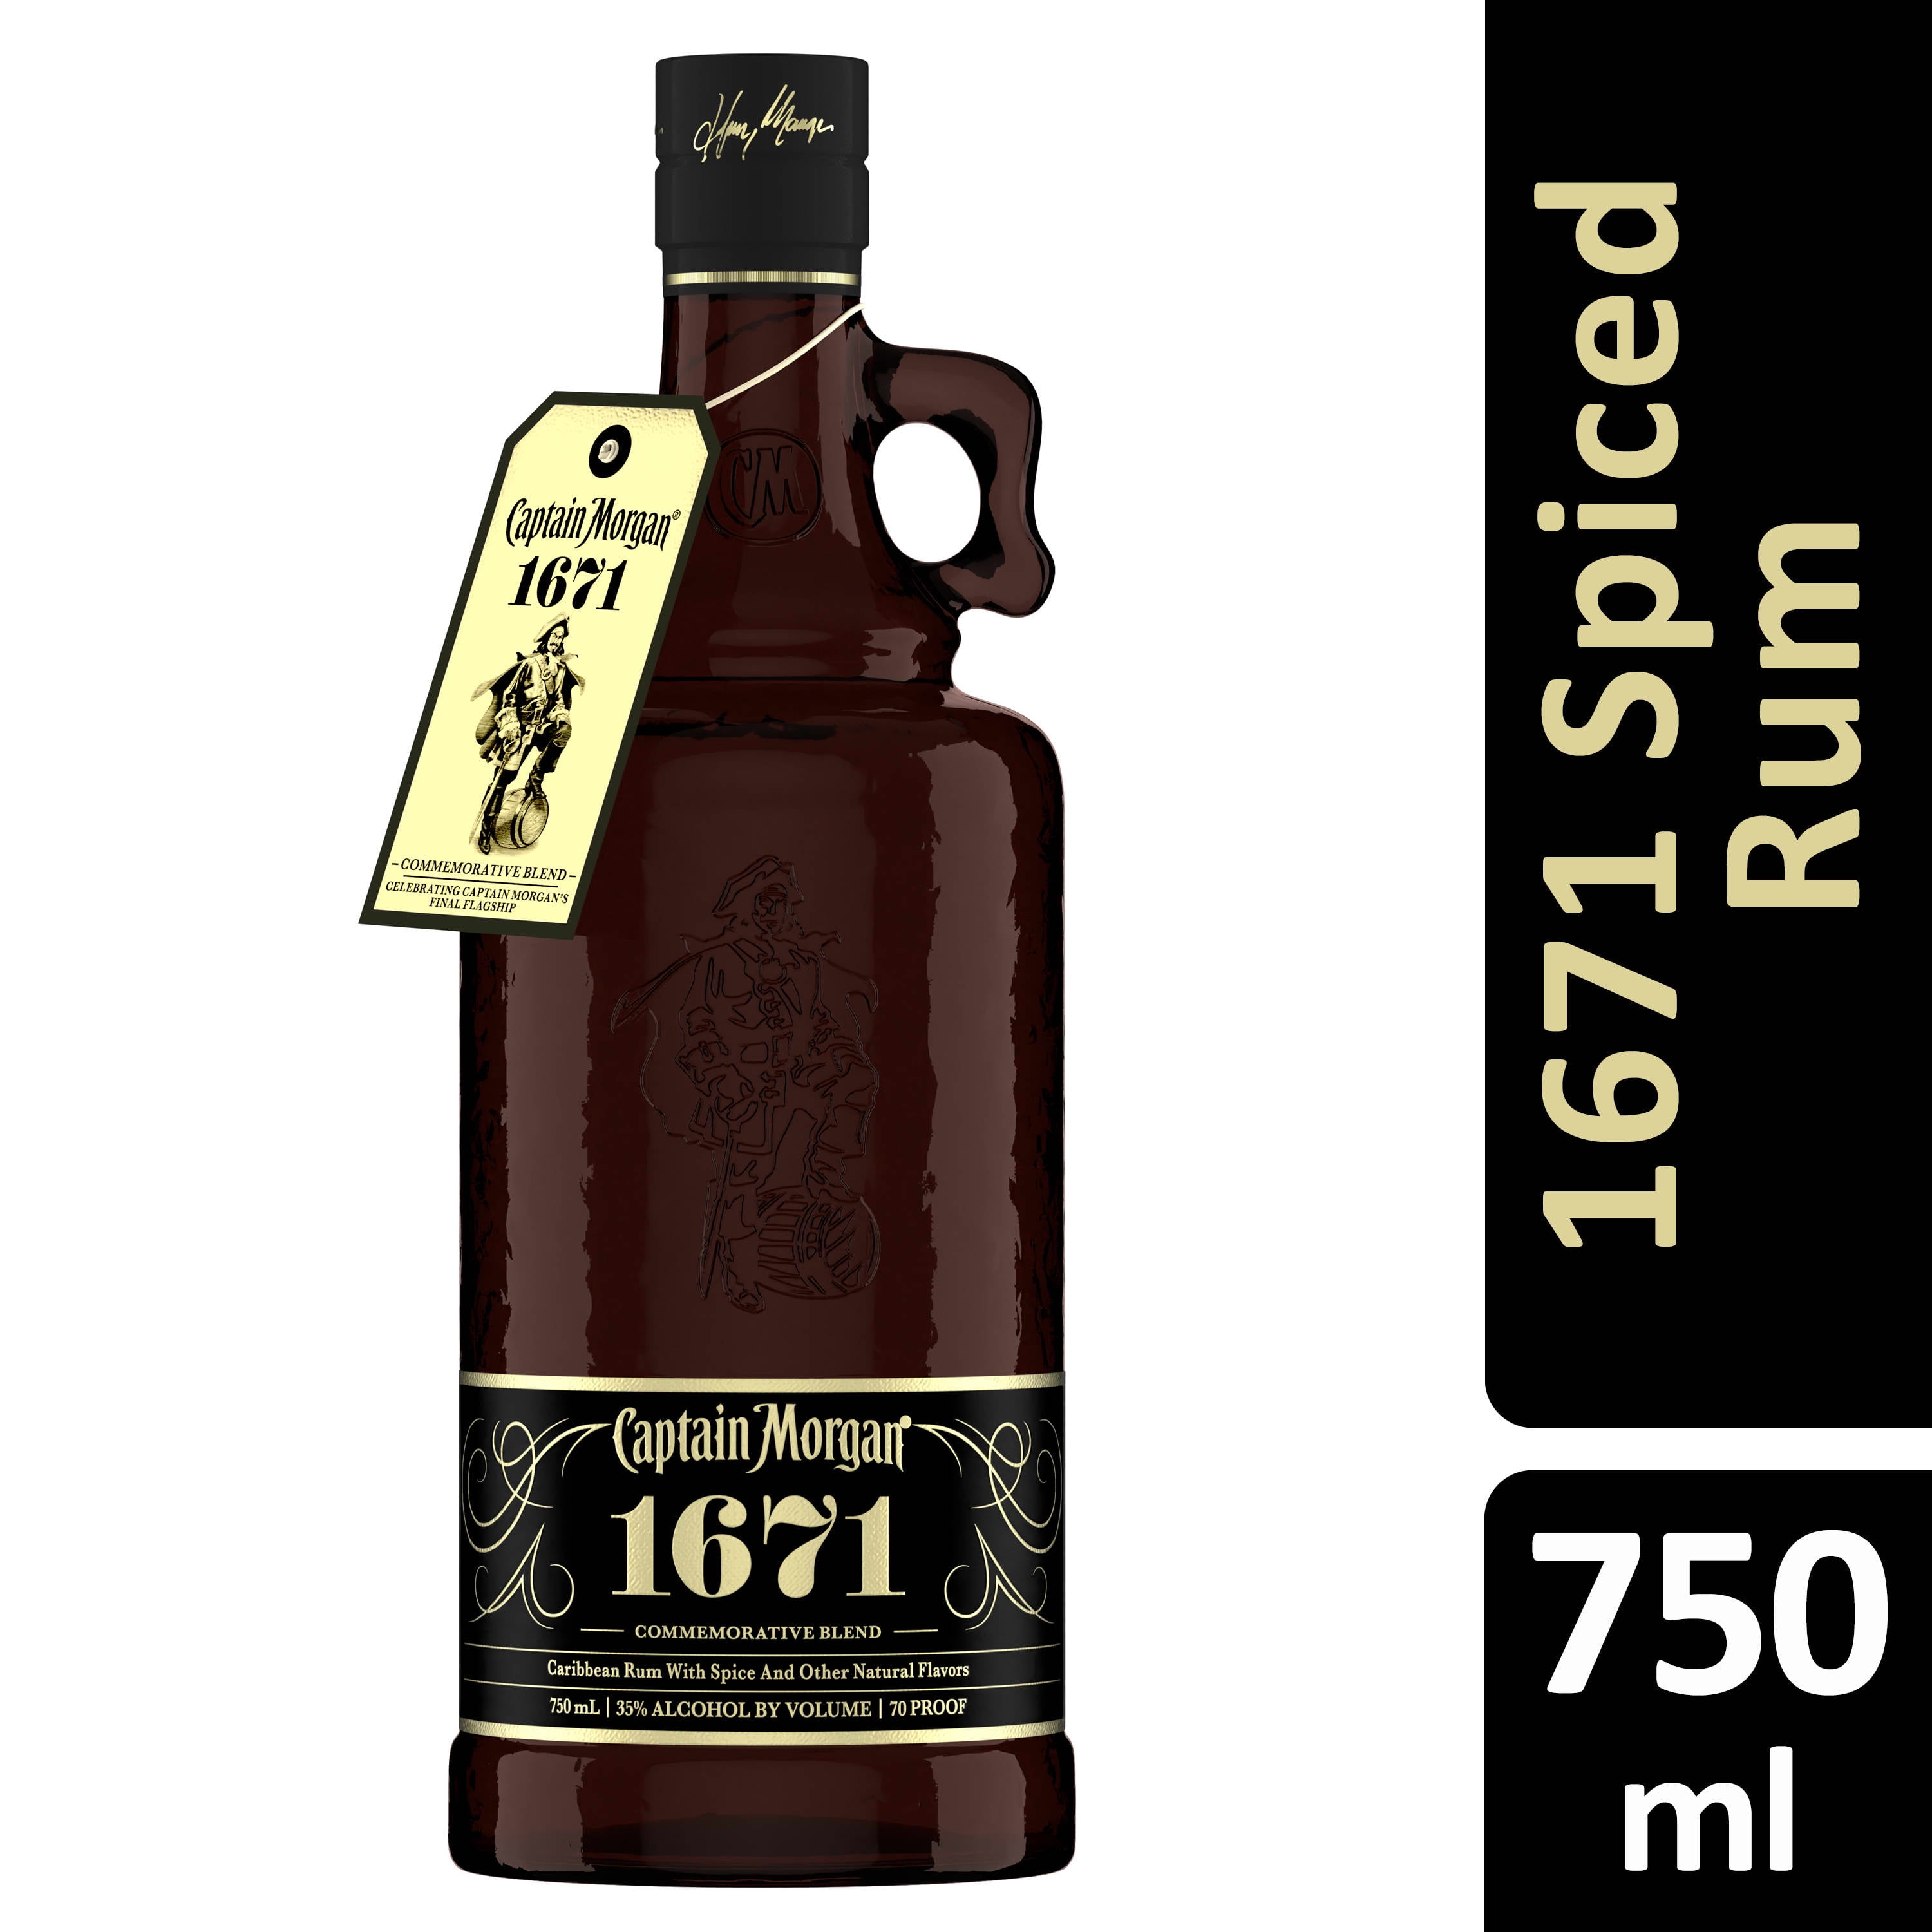 deform hævn squat Captain Morgan 1671 Spiced Rum, 750 mL, 35% ABV - Walmart.com